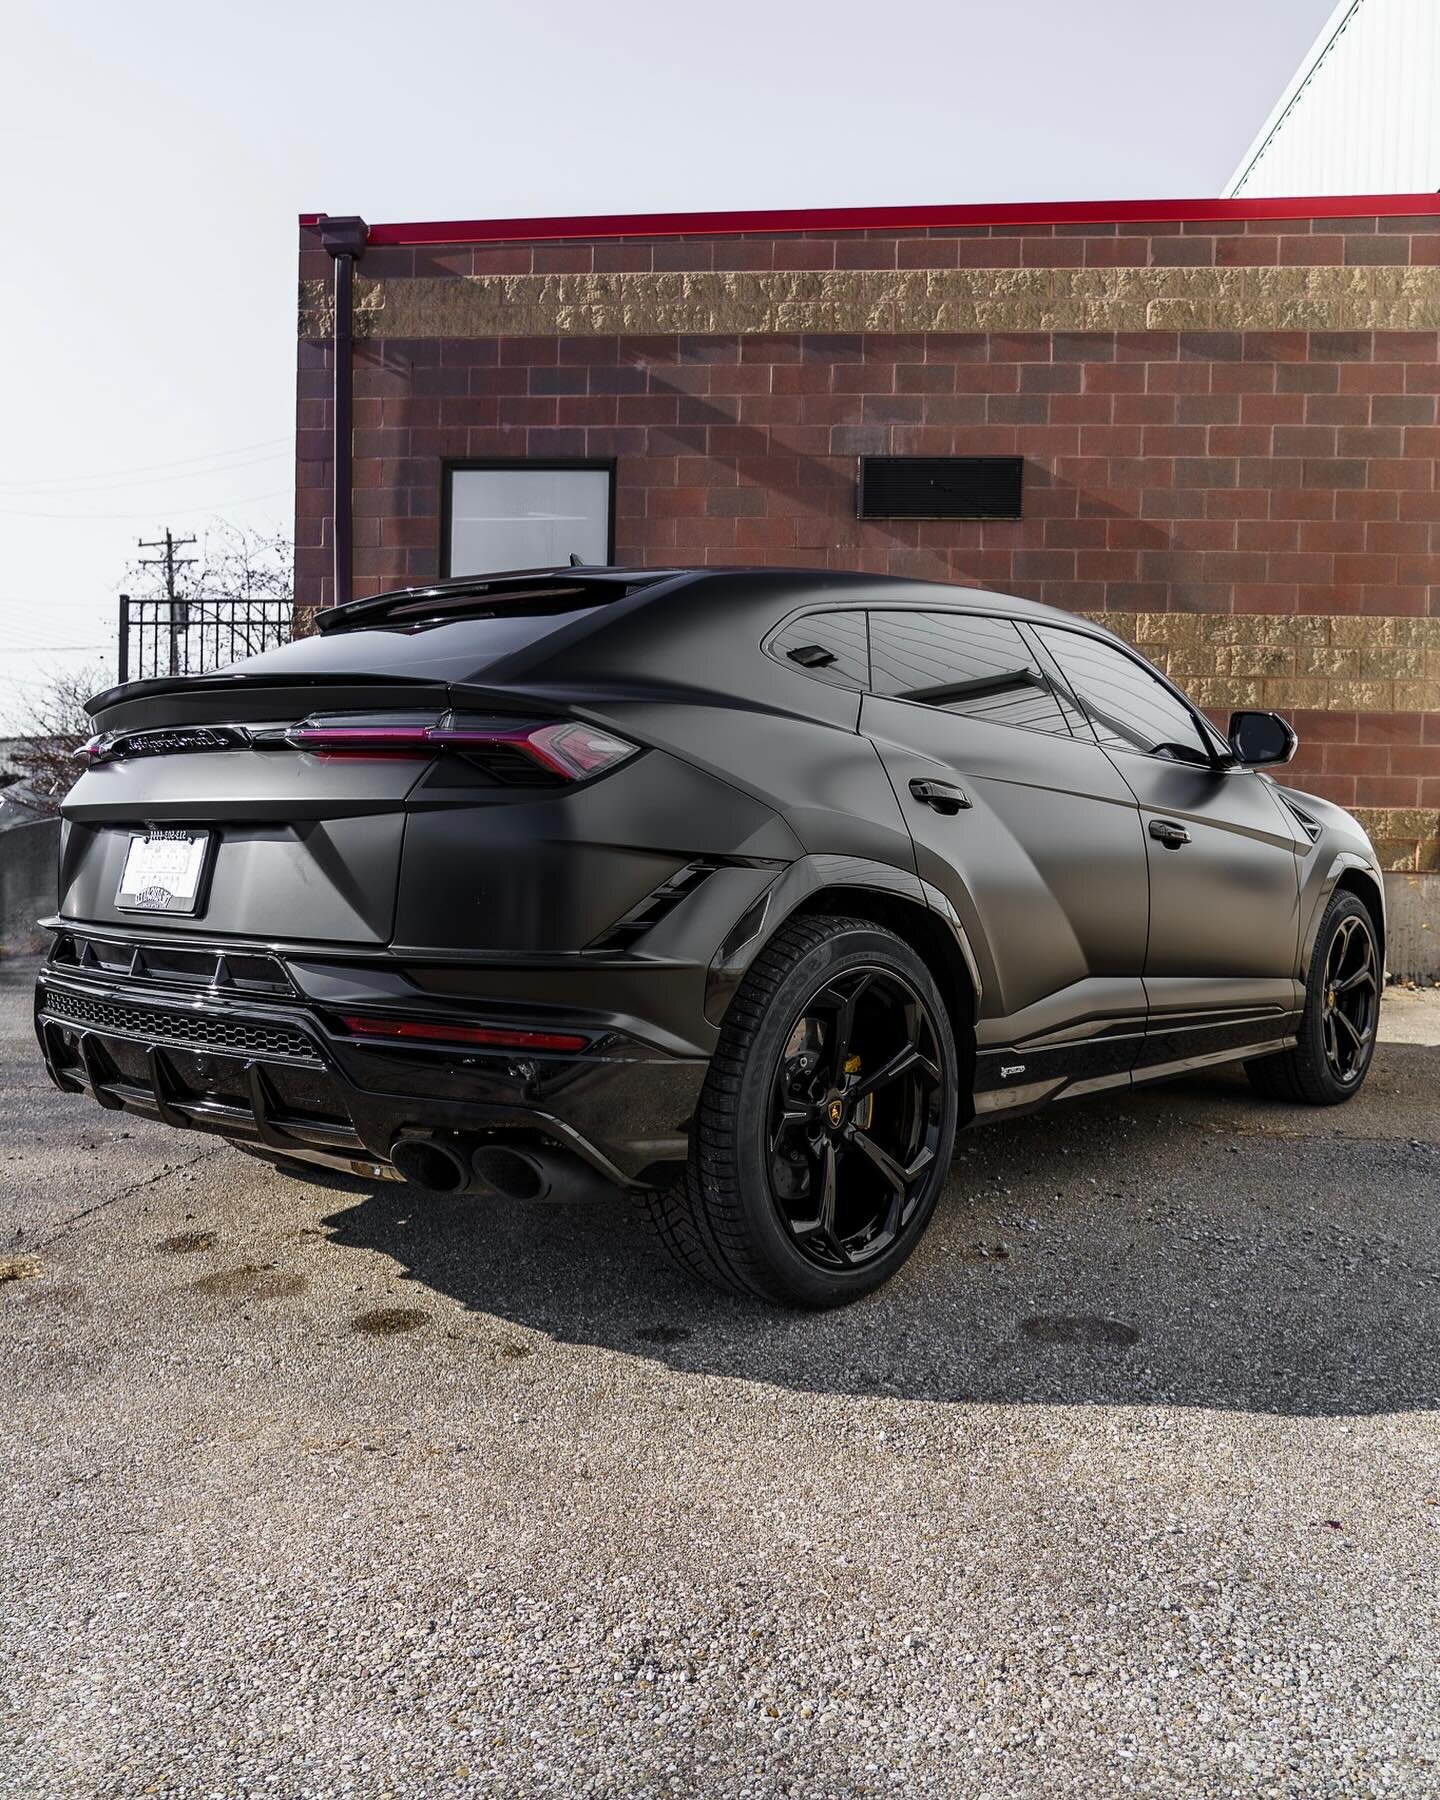 2023 Lamborghini Urus s
▪️Full Satin black wrap / w door jambs
▪️Full Ceramic IR window film
▪️Ceramic Pro Silver 
▪️Powder coated wheels 

#welcometotheclub #deadicatedautoclub #lamborghini #lamborghiniaventador #lamborghiniurus #urus #lamborghinihu